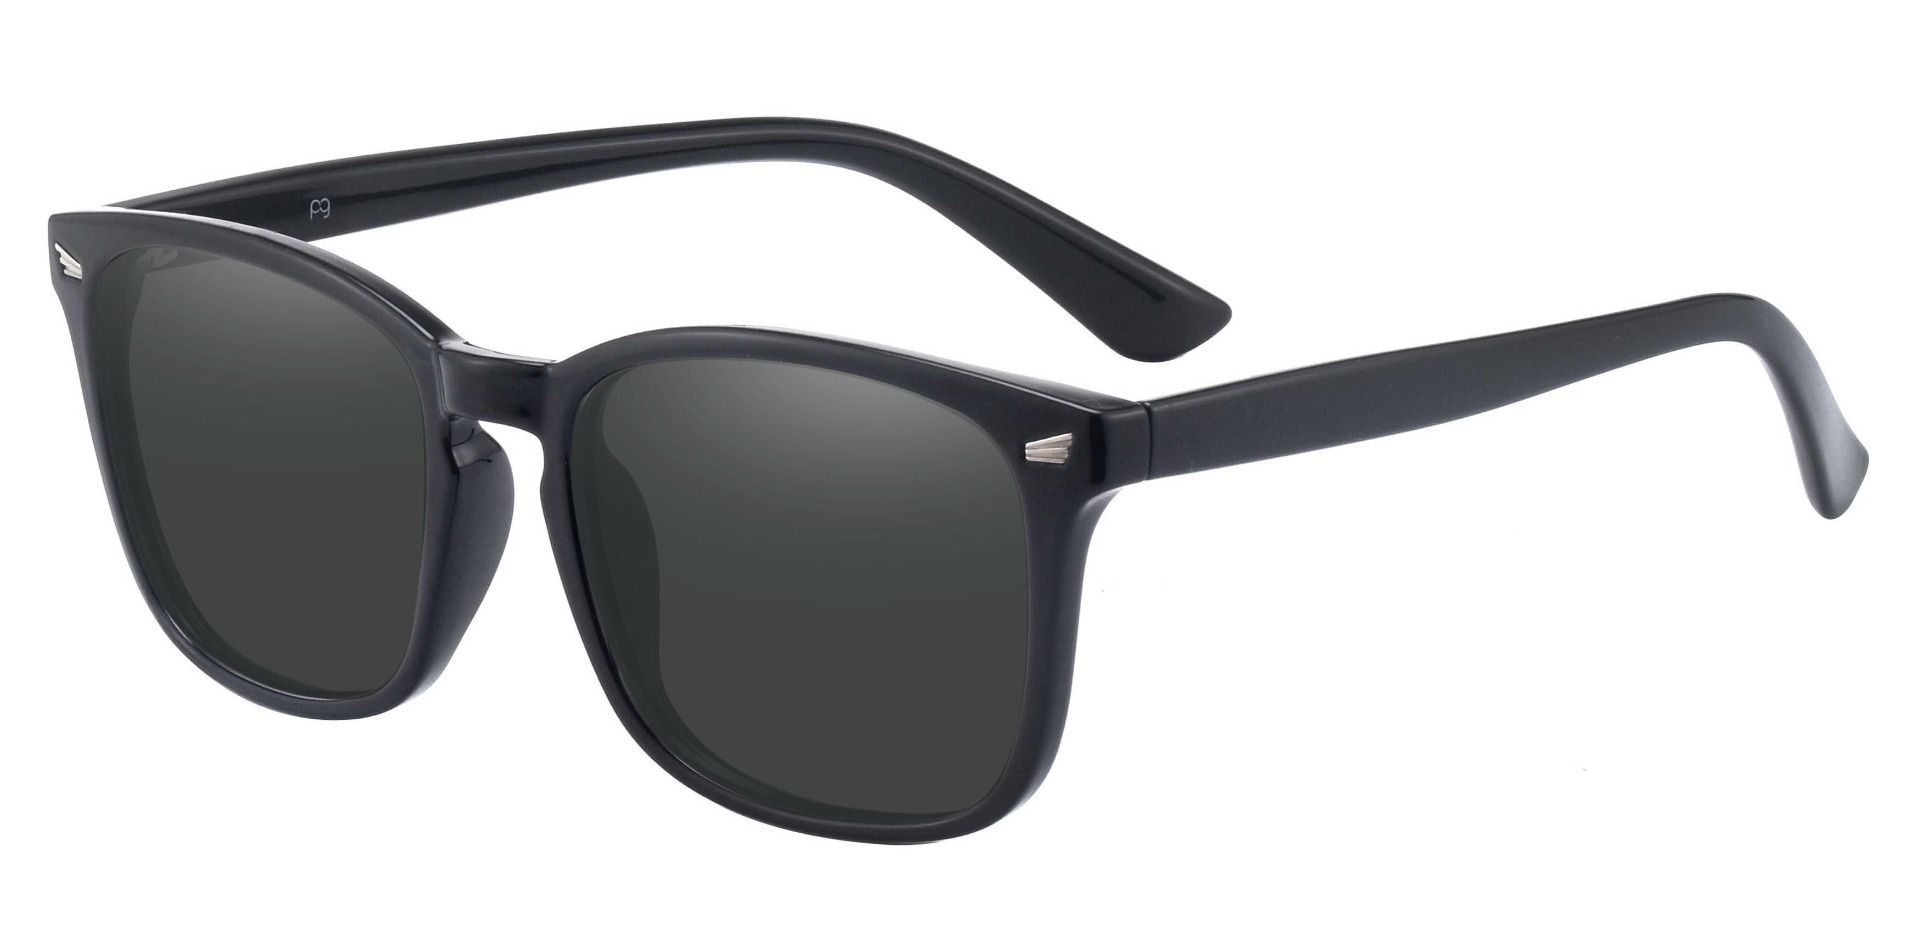 Zen Square Prescription Sunglasses - Black Frame With Gray Lenses